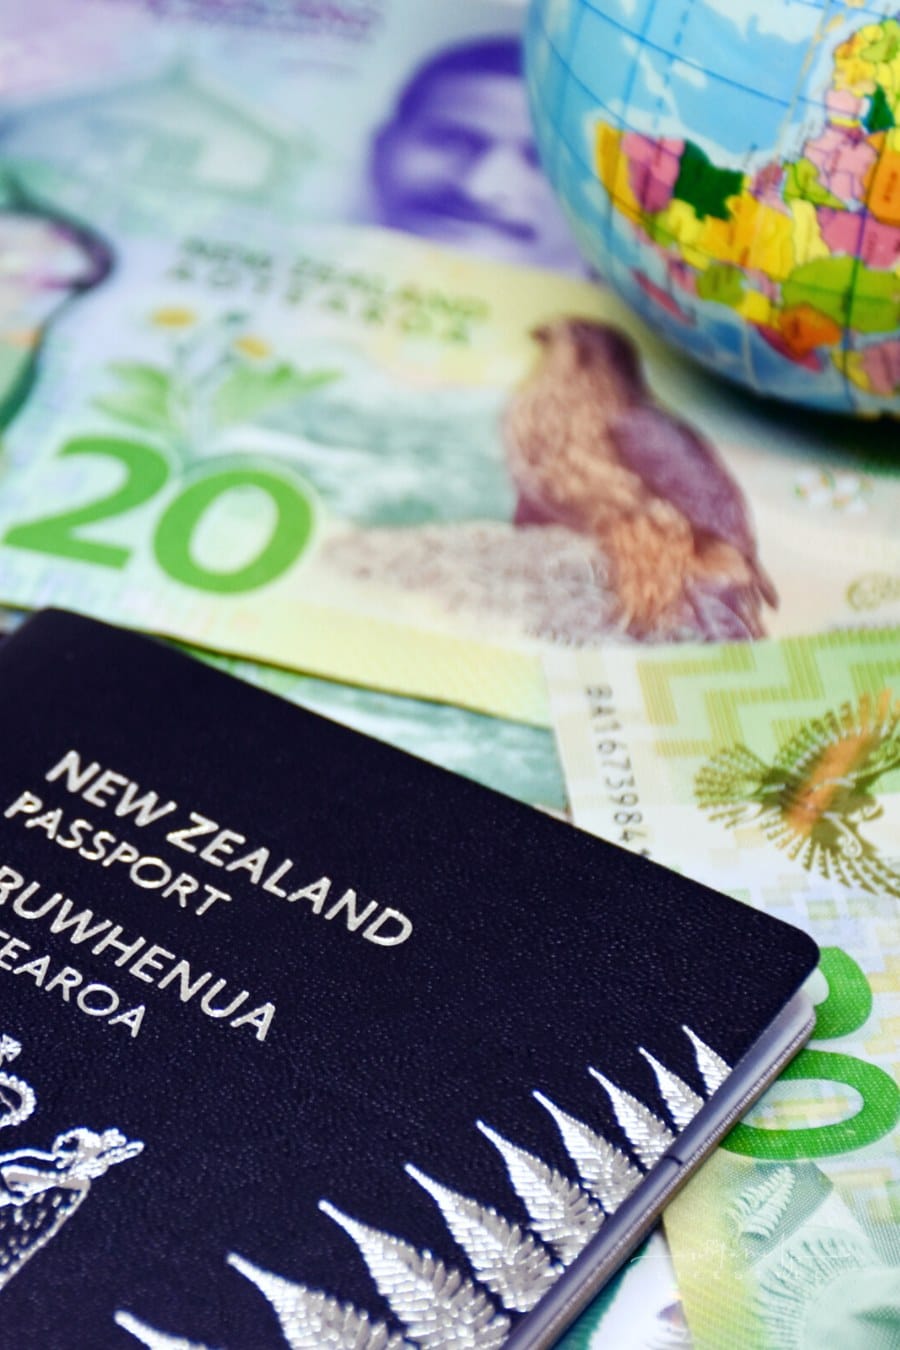 New Zealand passport on top of New Zealand dollars bank notes